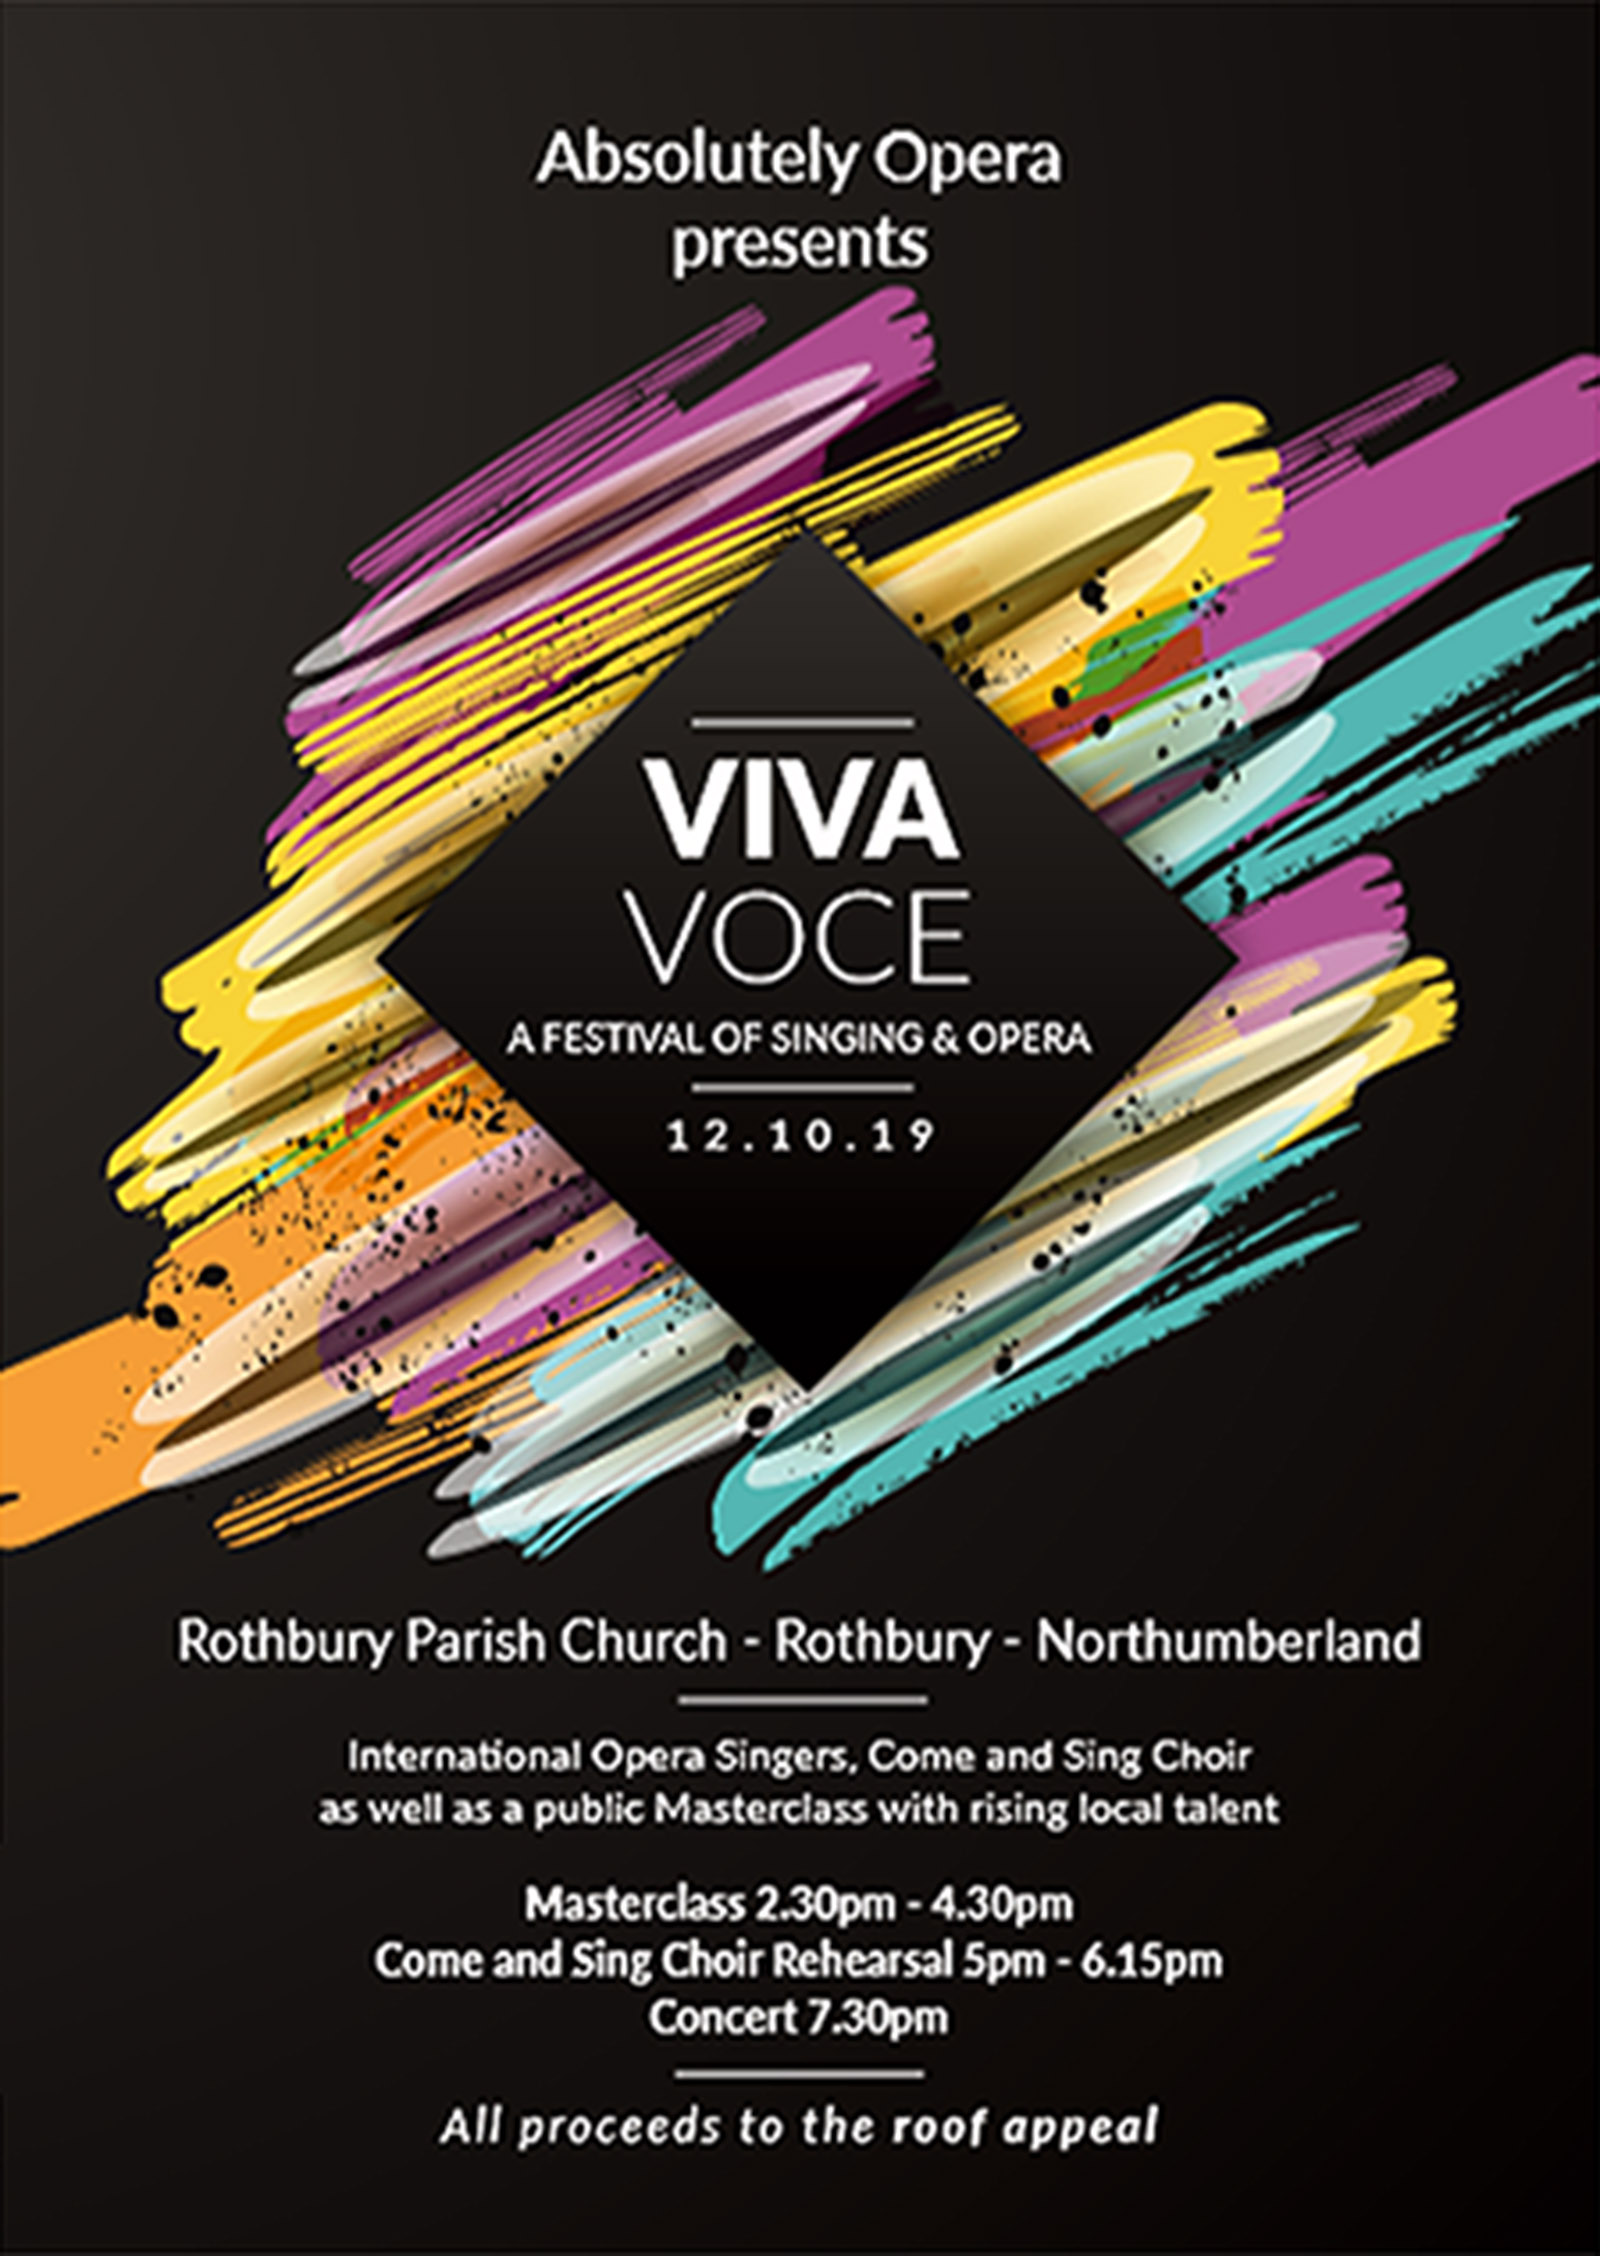 Zita Syme, soprano, Viva Voce Festival of Singing and Opera, 12th October 2019